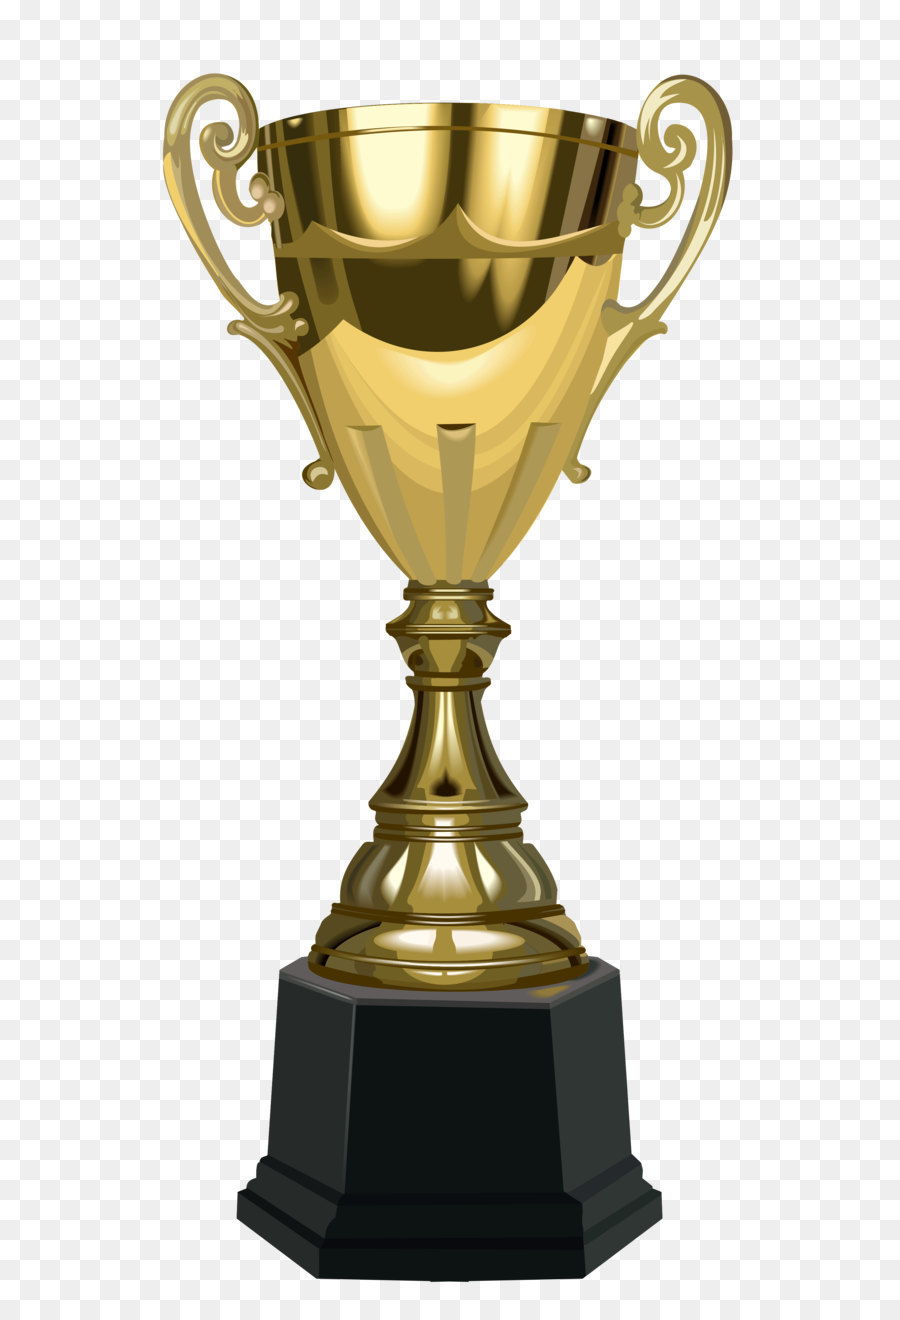 Trophy Prize Award Clip art - Cup Trophy PNG Clipart png download - 2223*4486 - Free Transparent Trophy png Download.